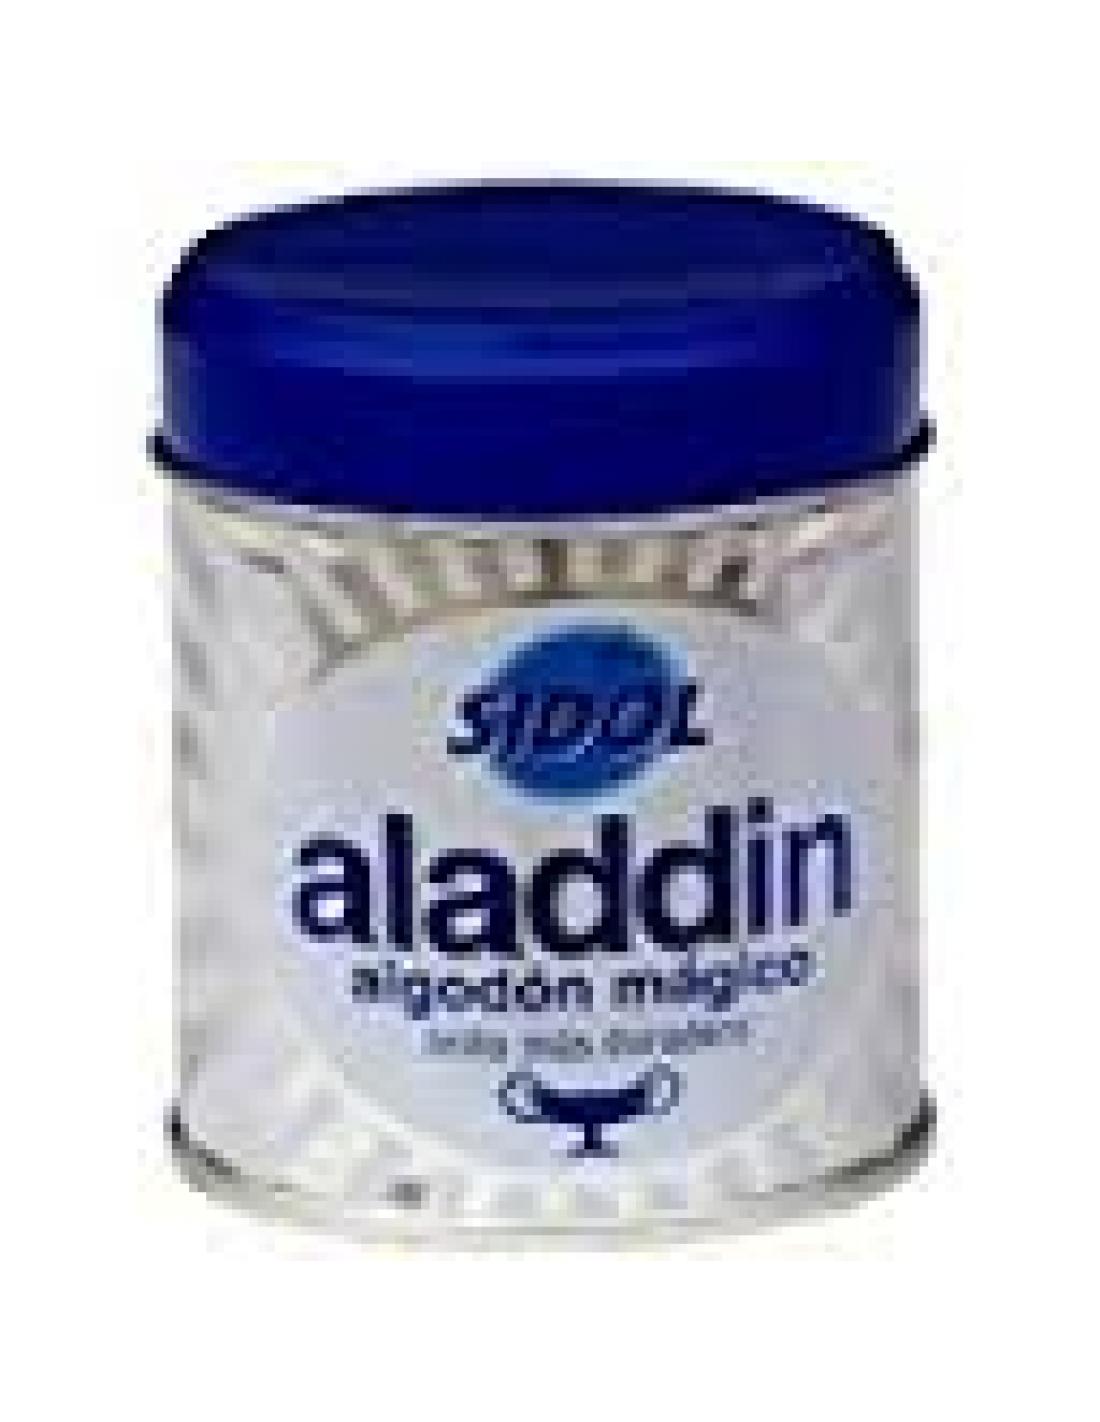 ALGODON MAGICO ALLADIN, 75grs. (SIDOL)